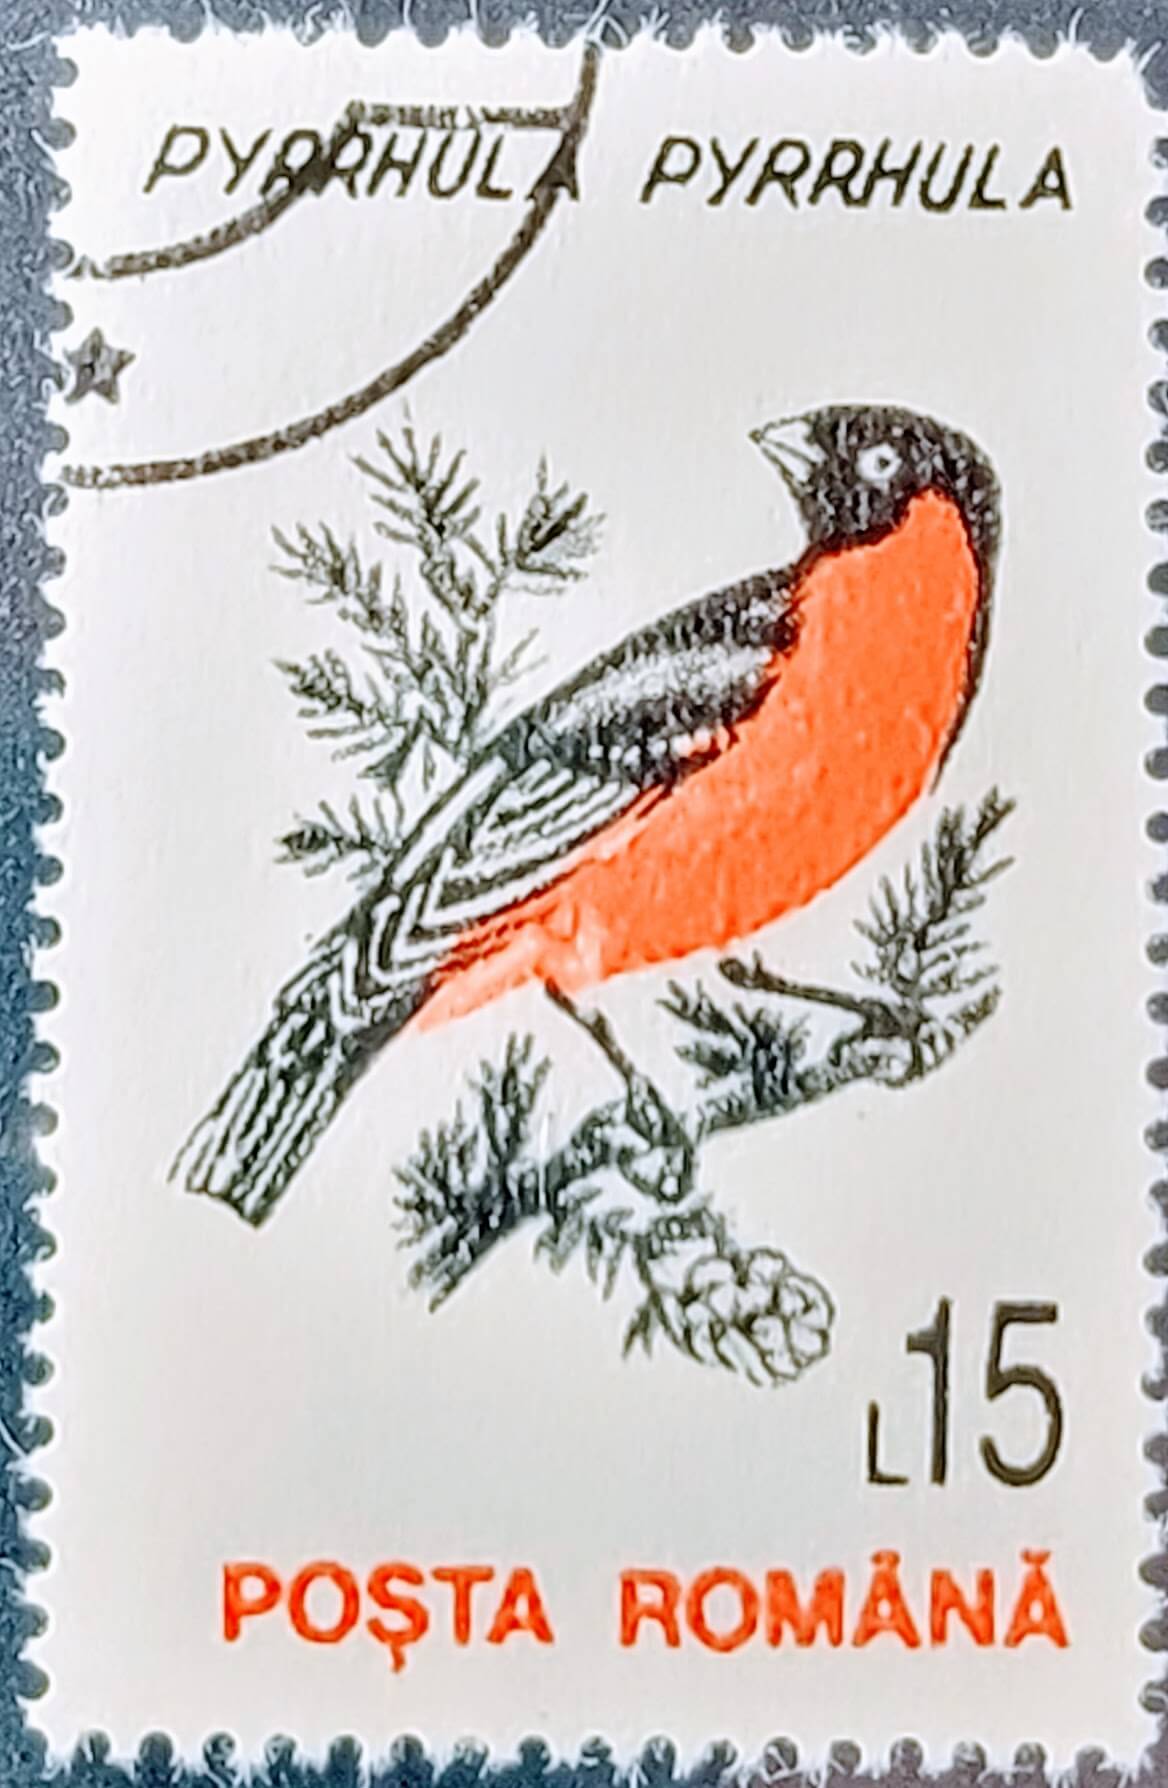 Posta Romana Bird Stamp,Posta Romana Pyrrhula Pyrrhula bird, Pyrrhula Pyrrhula bird stationary